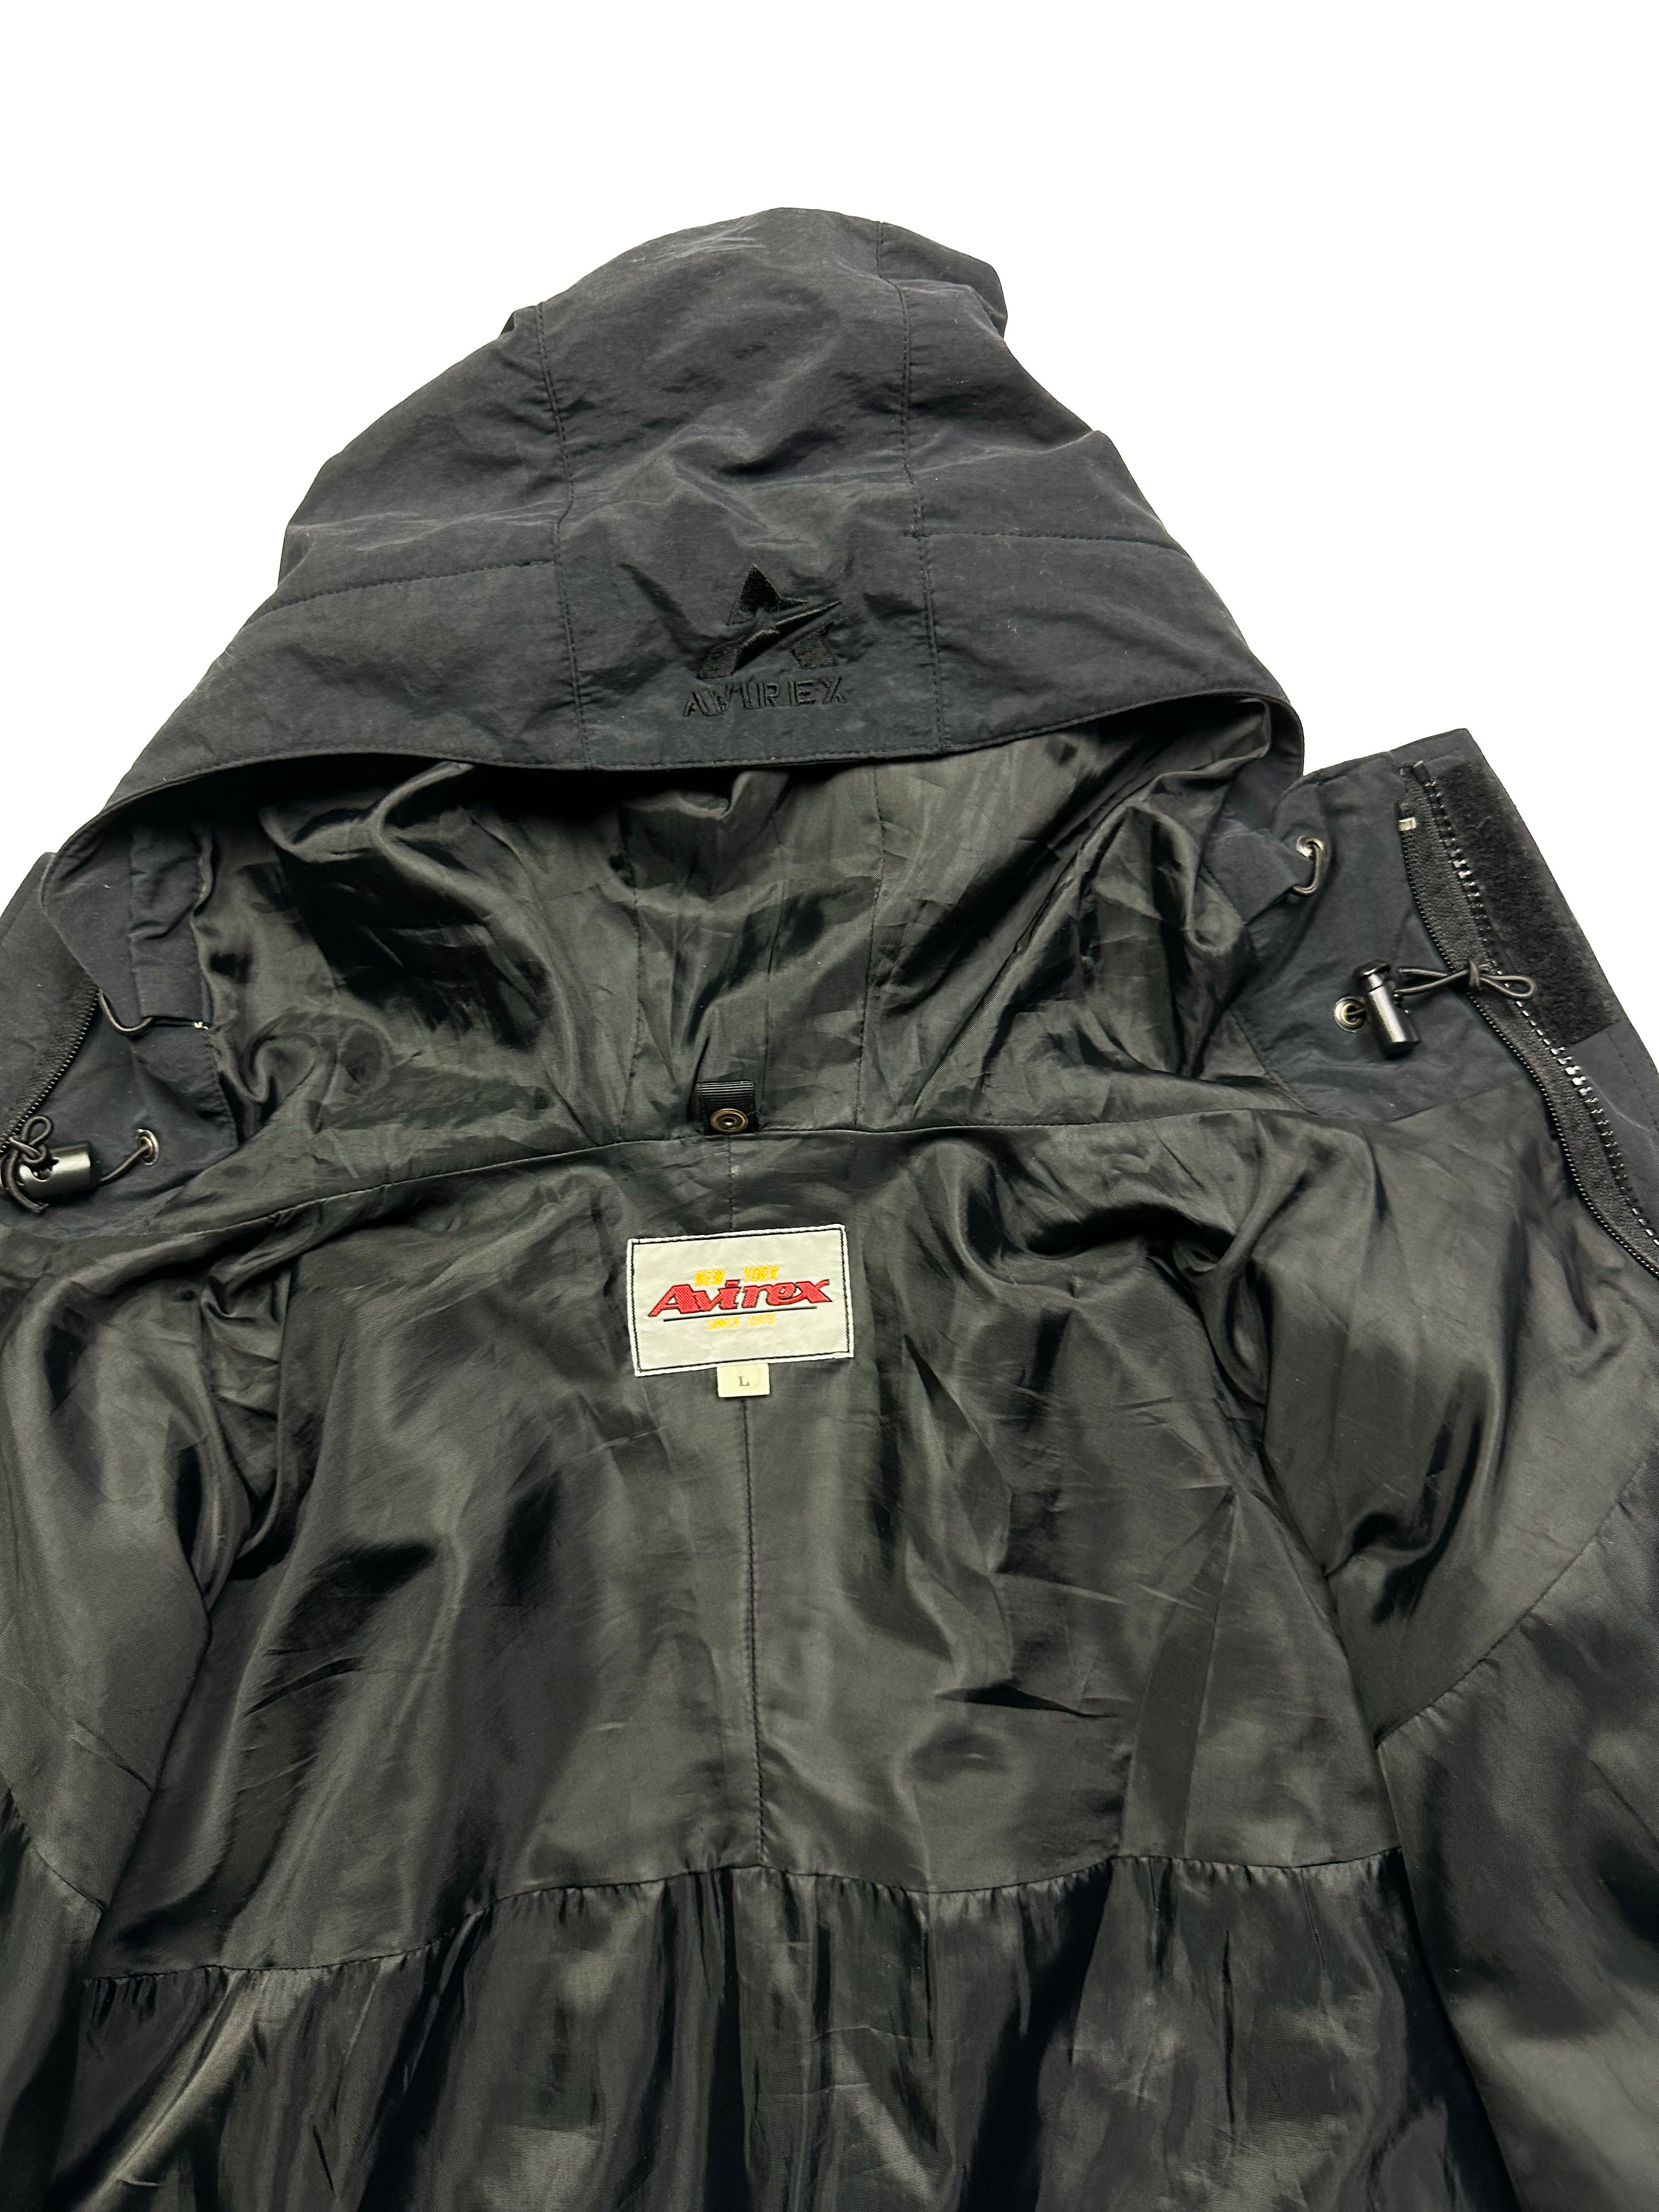 Avirex Mountain Gore-tex Jacket 90's